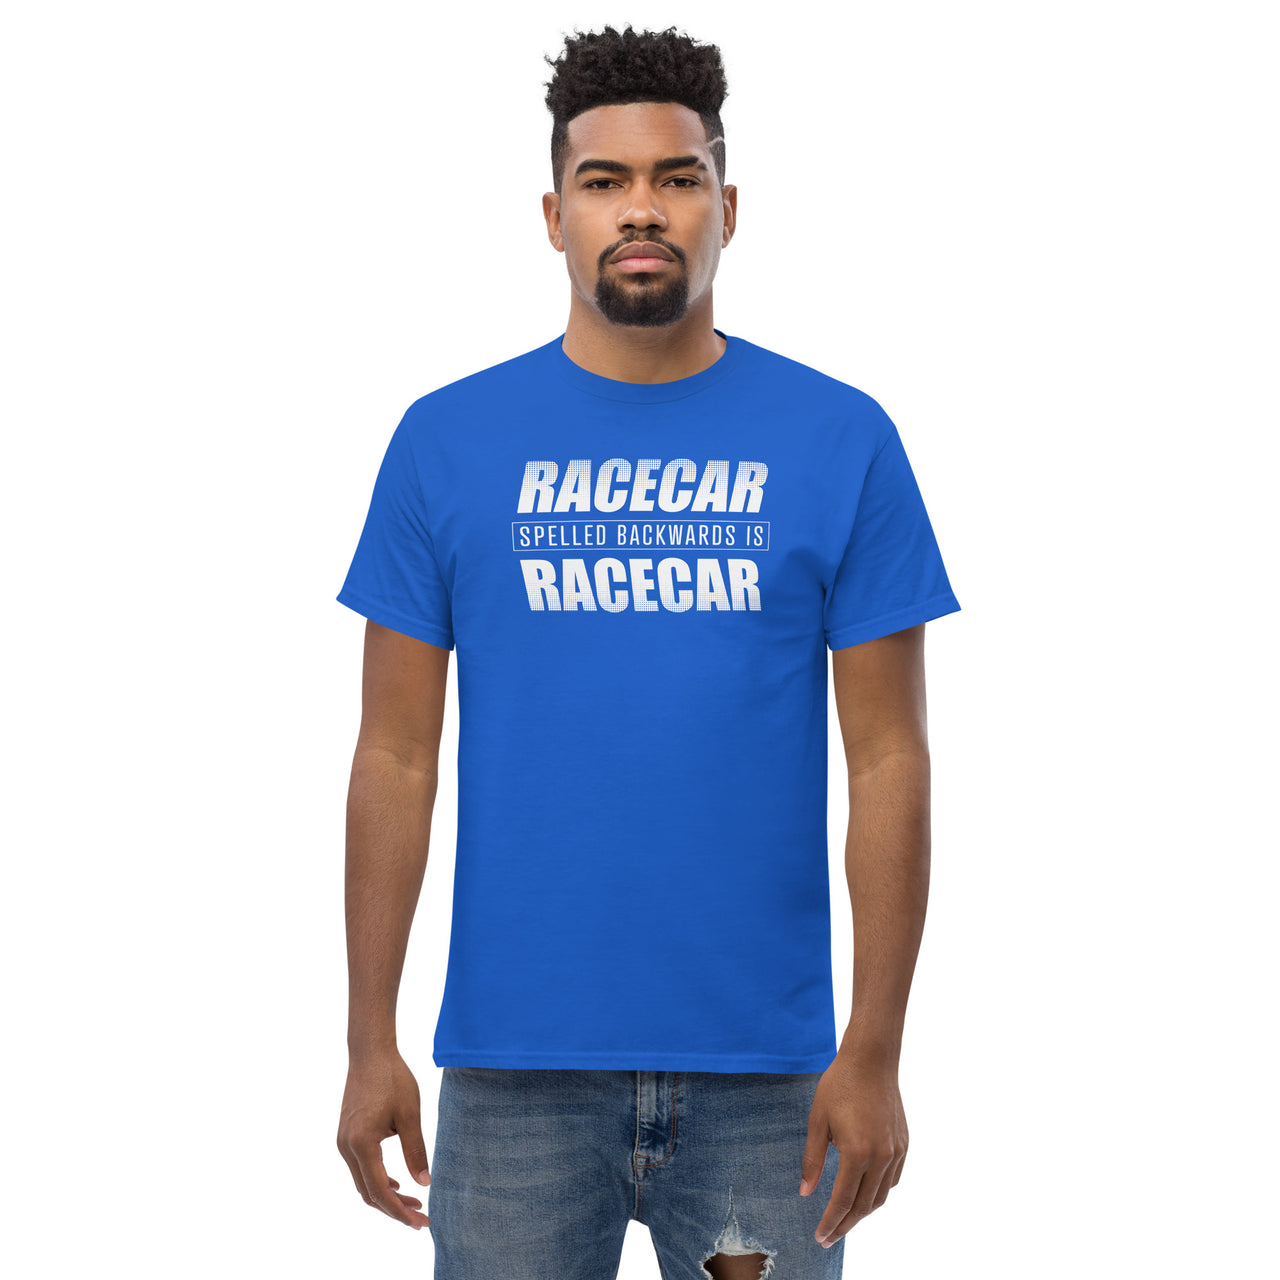 Funny Racecar Shirt, Car Enthusiast Gift, Drag Racing, or Racecar T-Shirt modeled in blue